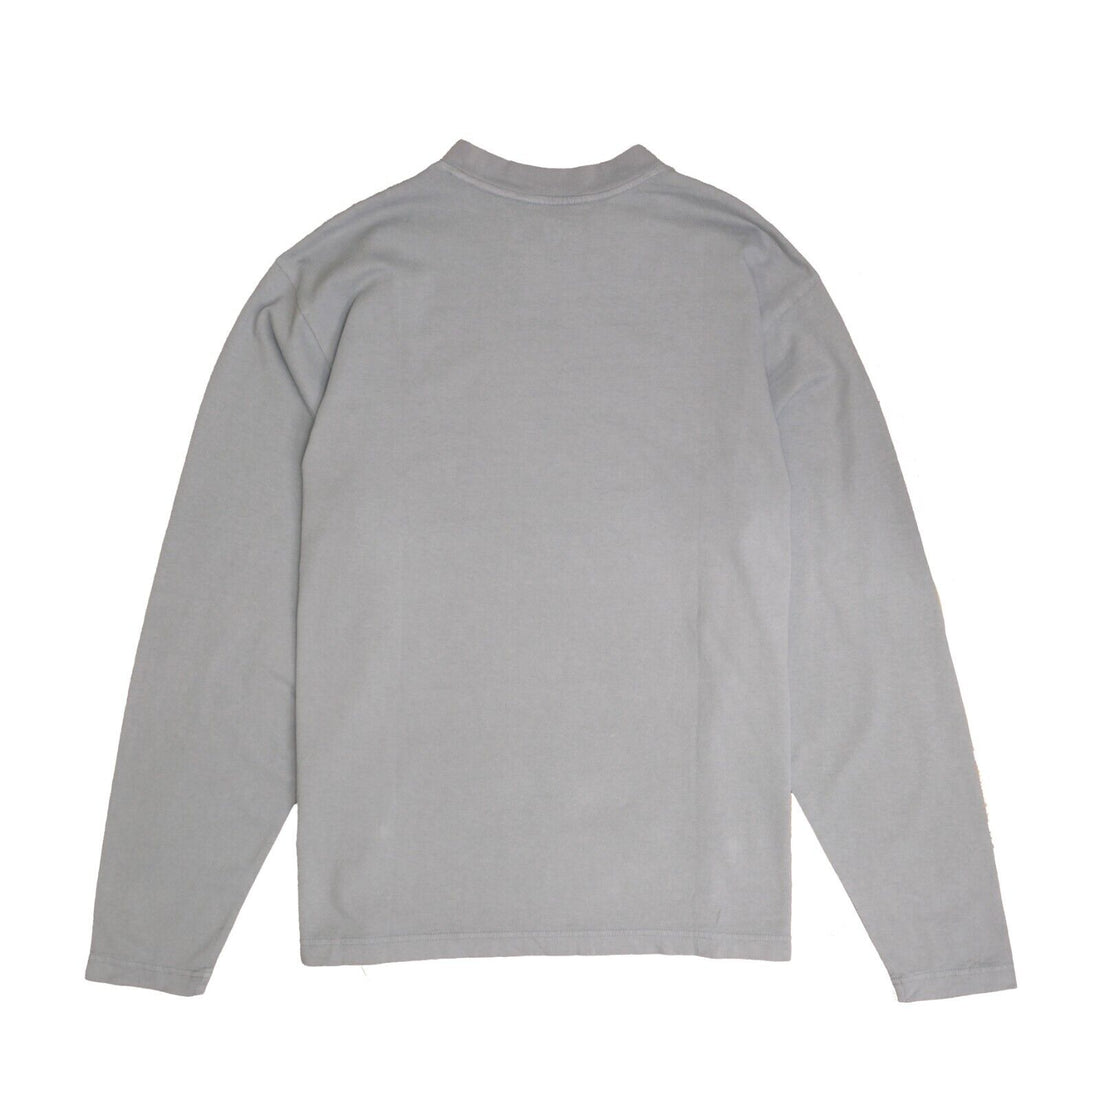 Yeezy Gap Unreleased Long Sleeve T-Shirt Size Large Gray